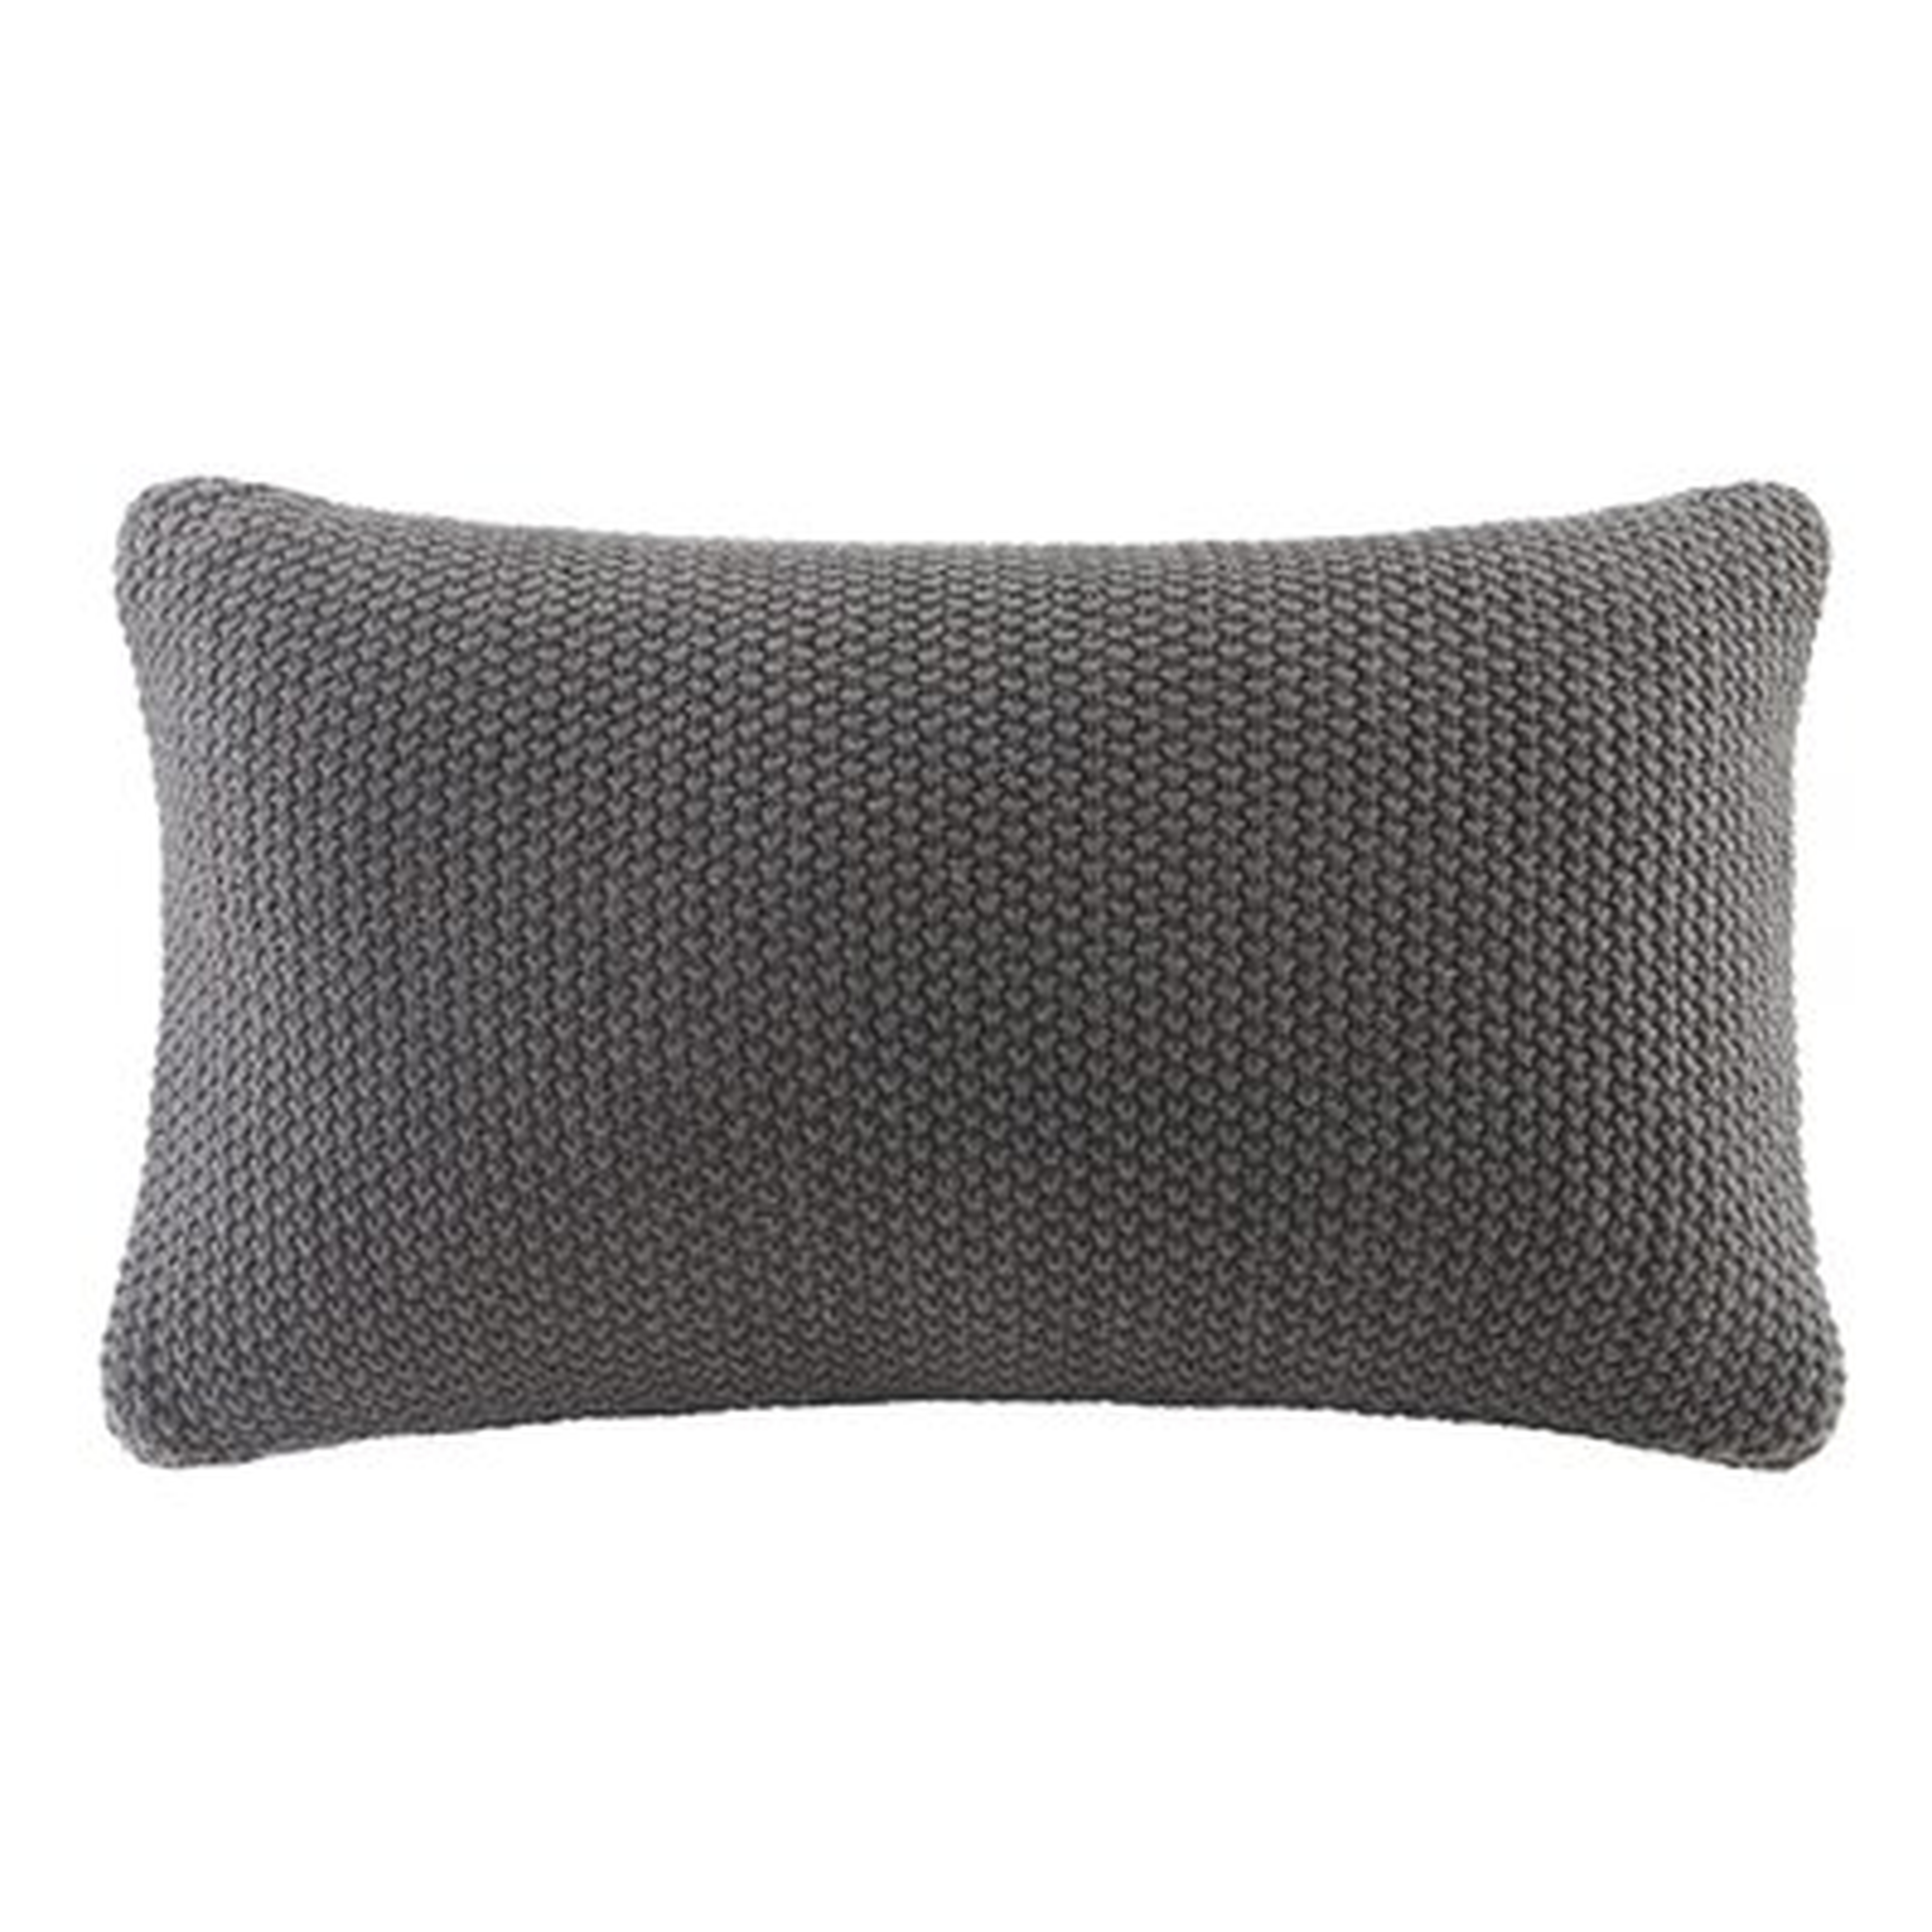 Caronni Knit Lumbar Pillow Cover - AllModern